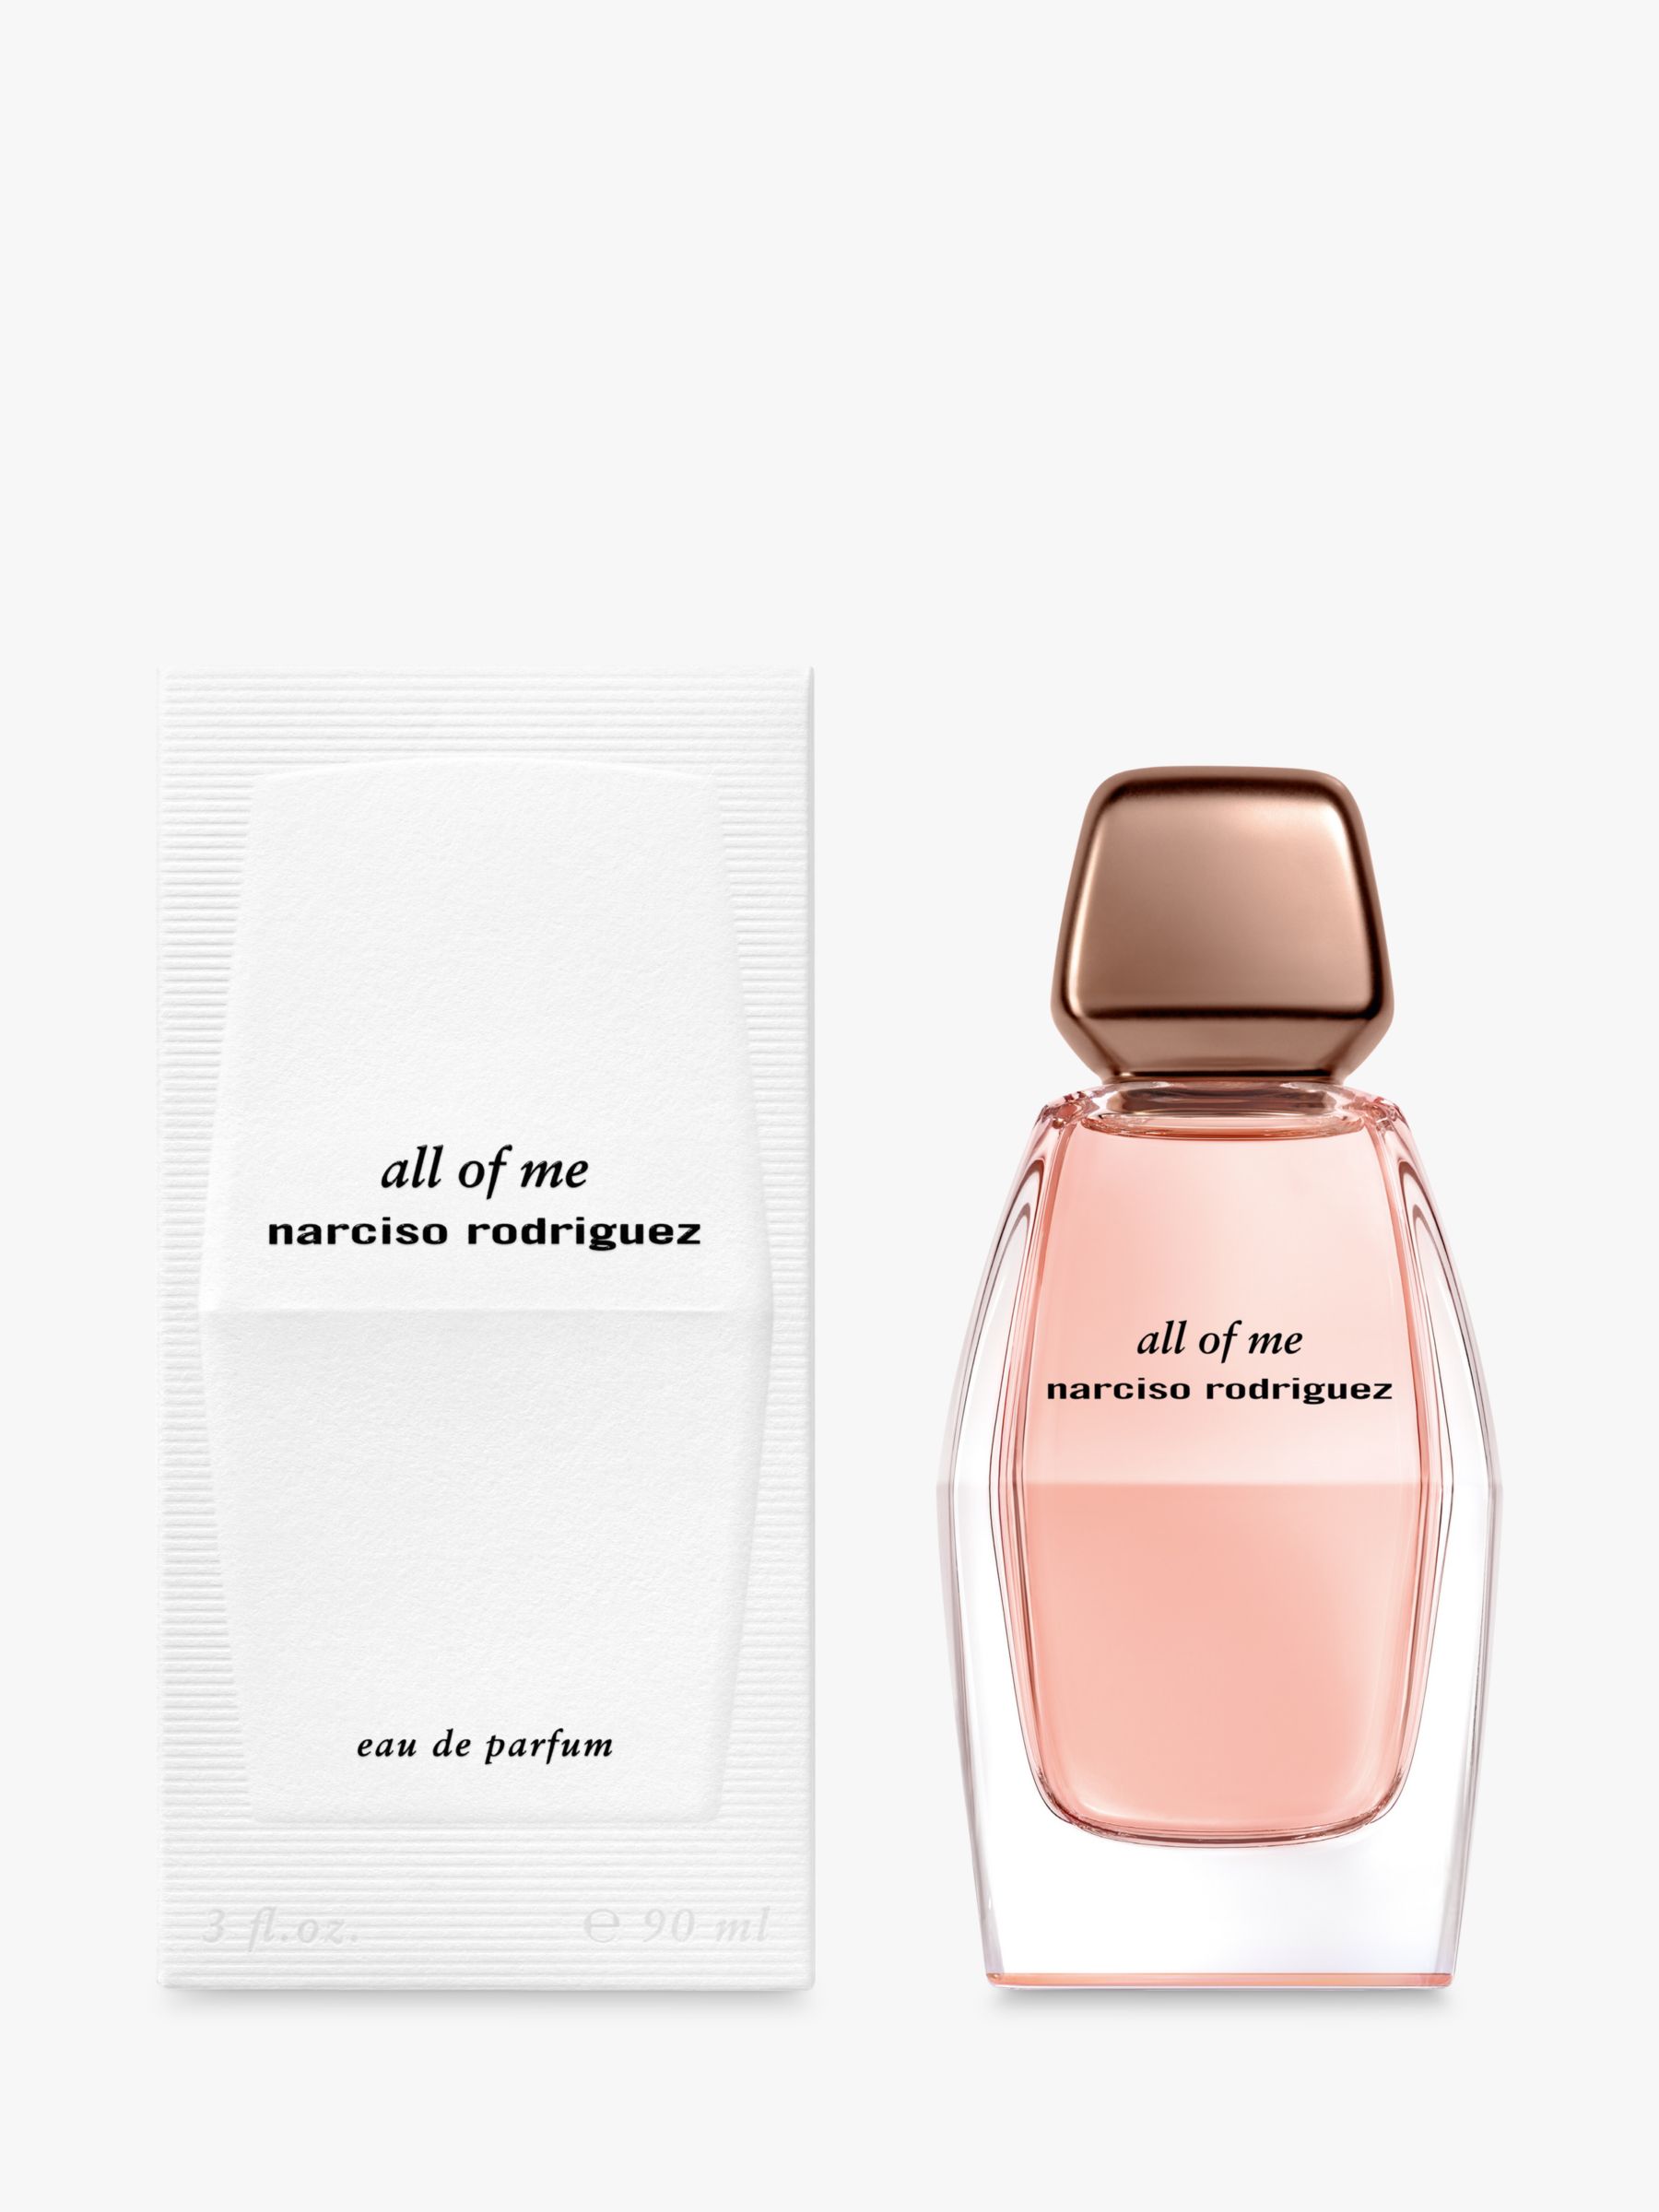 Narciso Rodriguez All Of Me Eau de Parfum, 90ml at John Lewis & Partners